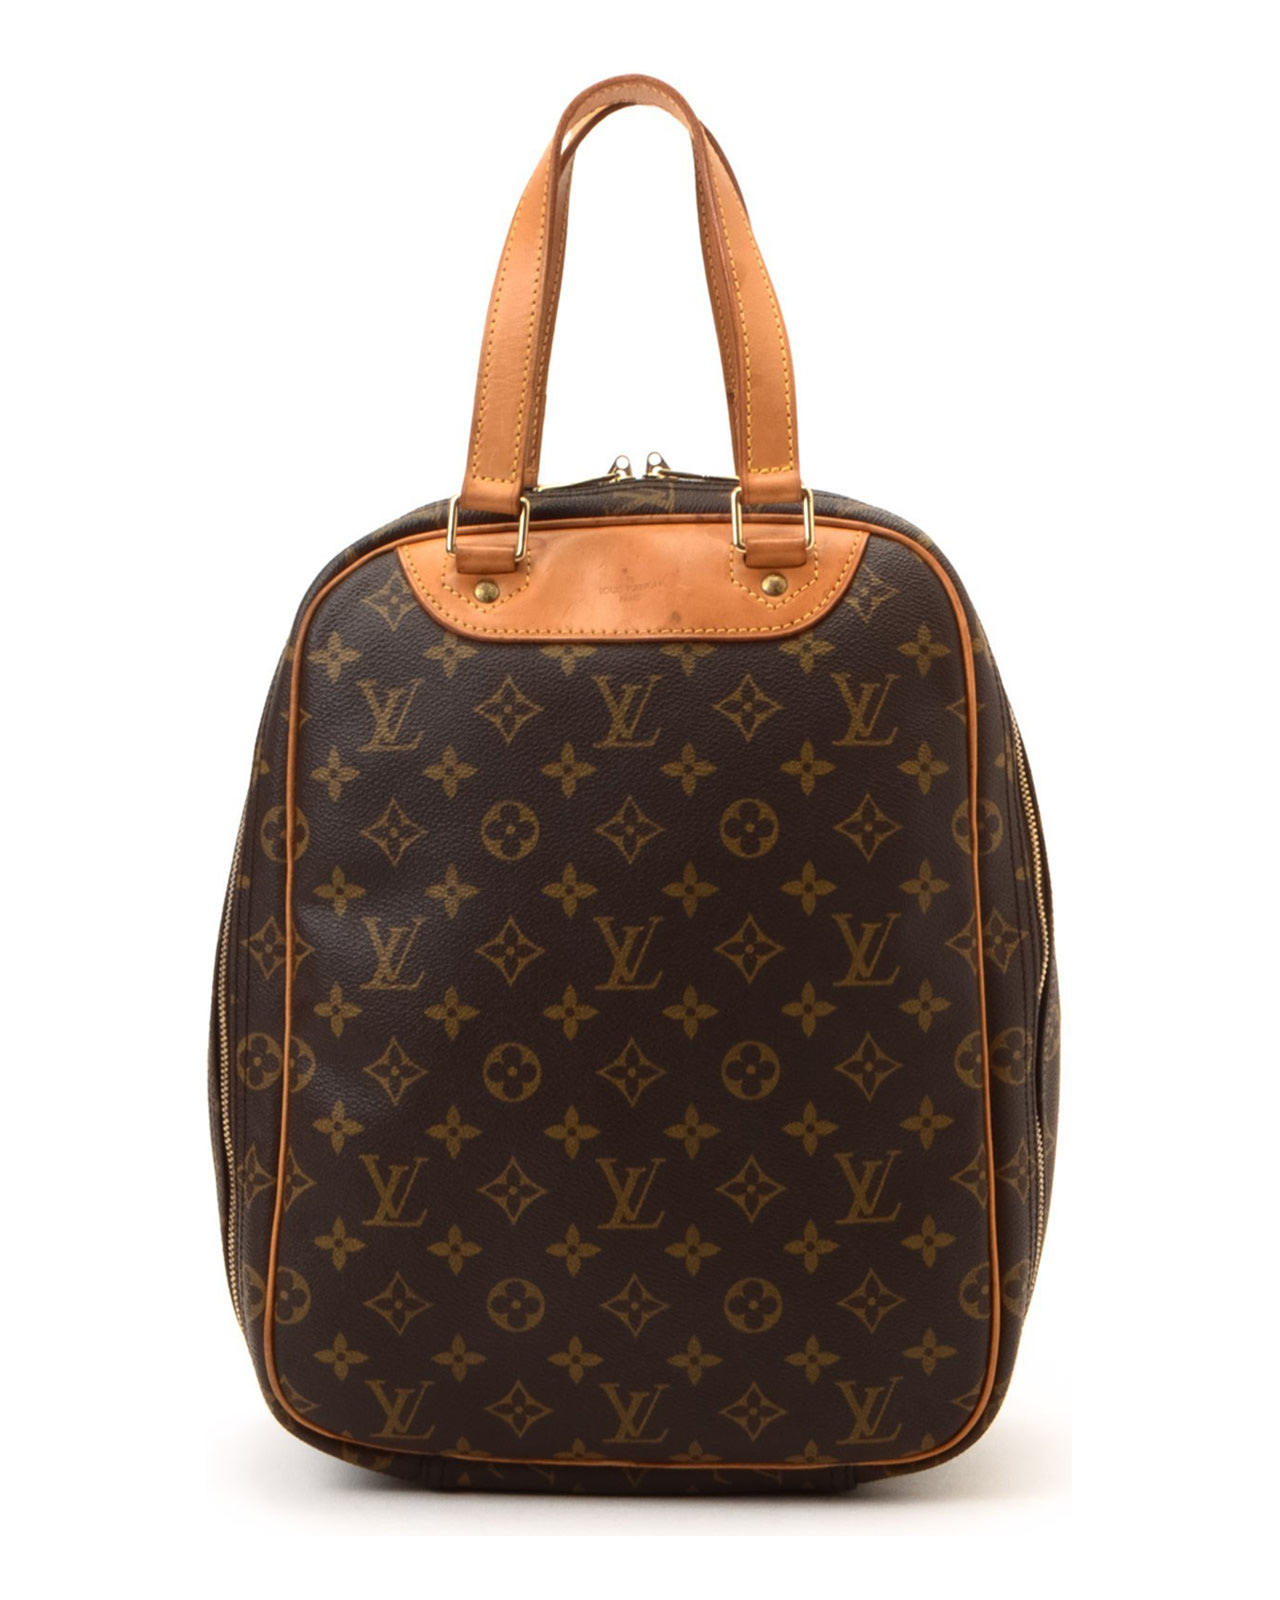 Lyst - Louis Vuitton Excursion Handbag in Brown